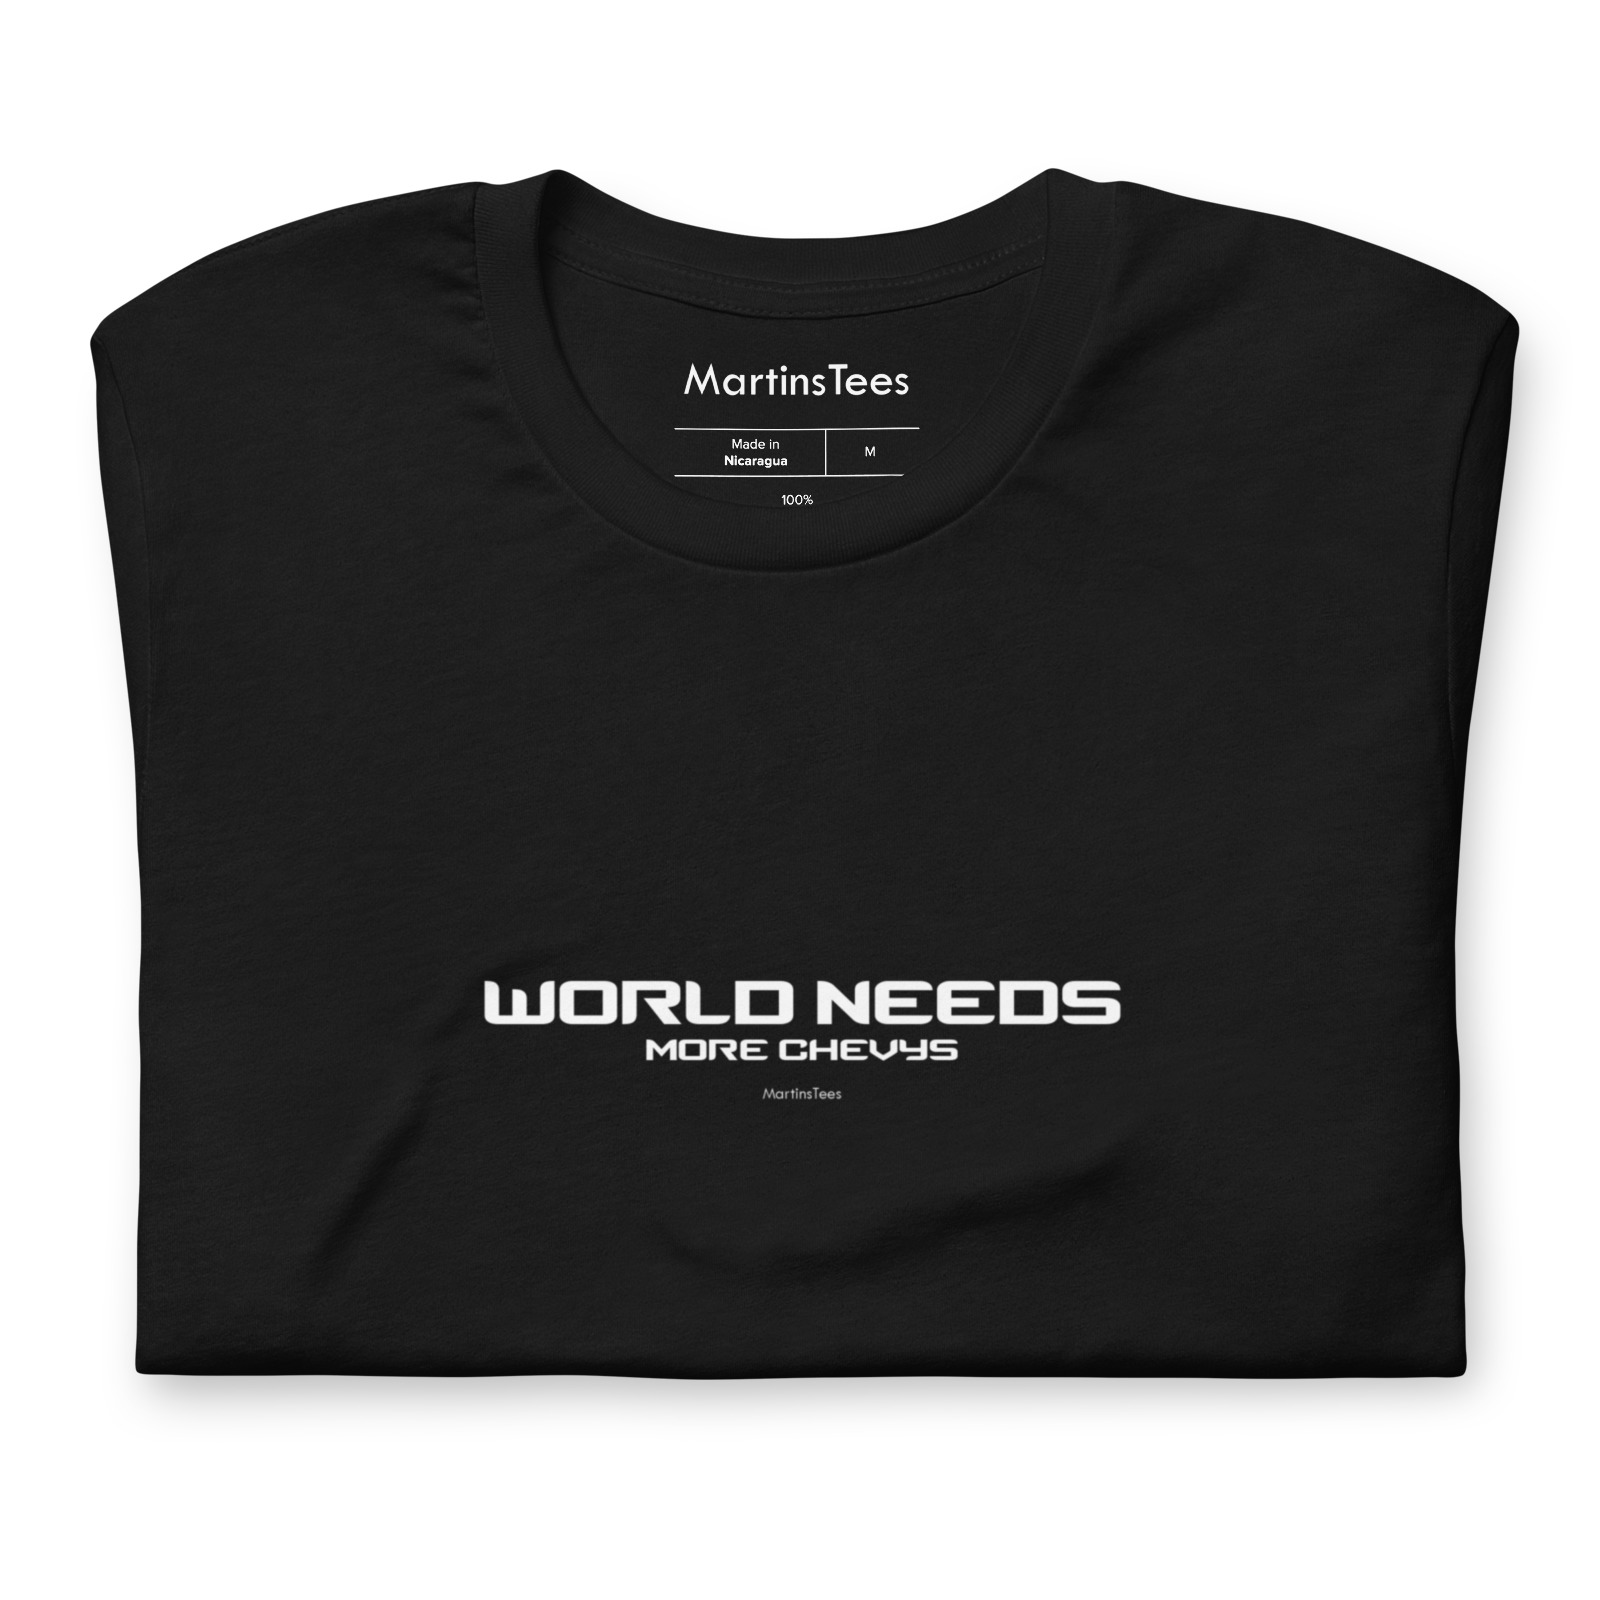 T-shirt: WORLD NEEDS - MORE CHEVYS